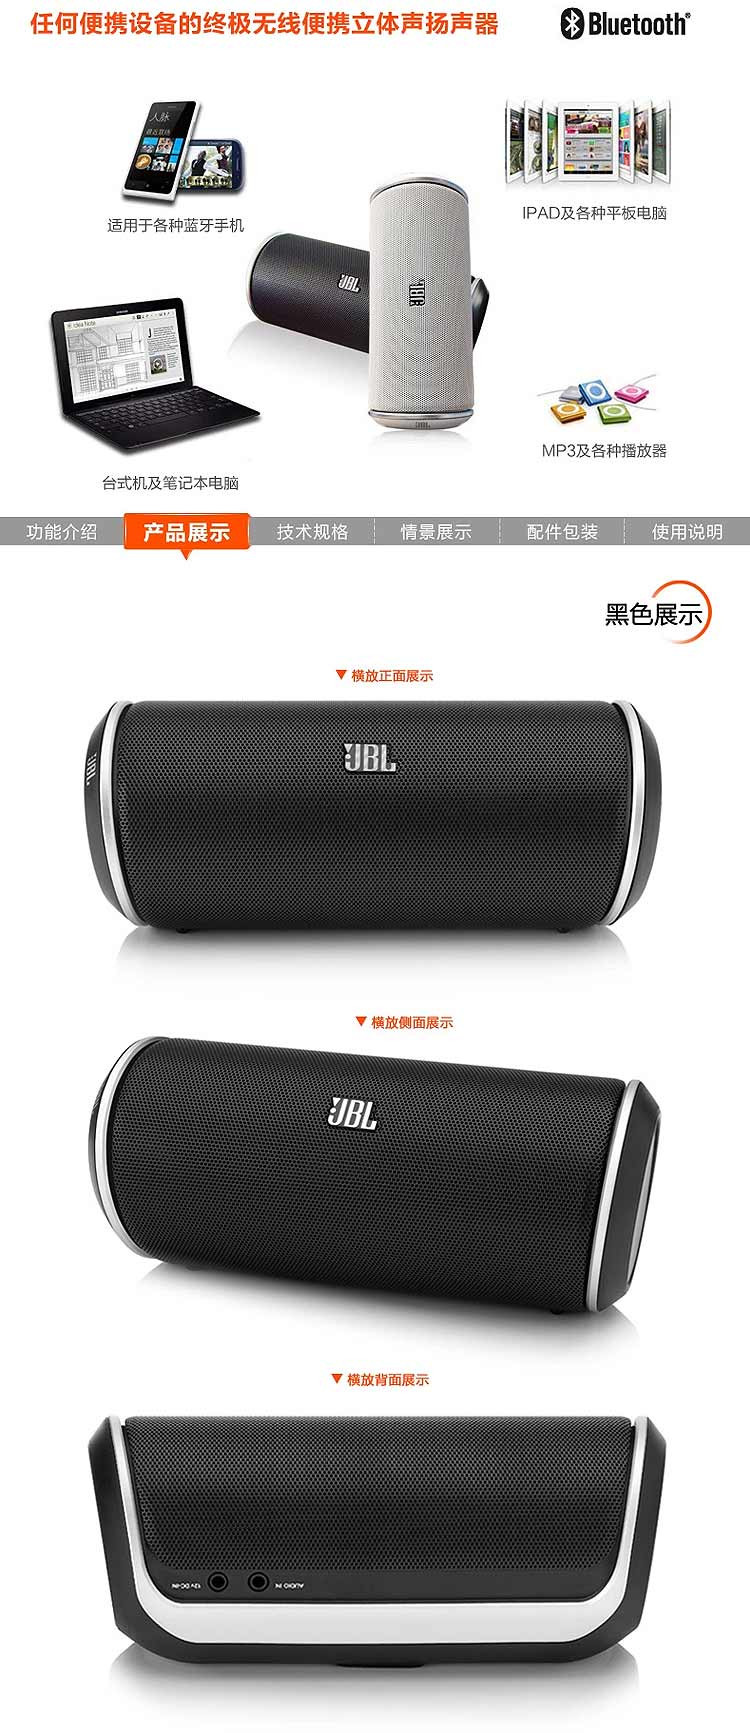 JBL FLIP2 音乐万花筒二代 手机蓝牙便携式音箱户外音箱支持免提通话功能 黑色